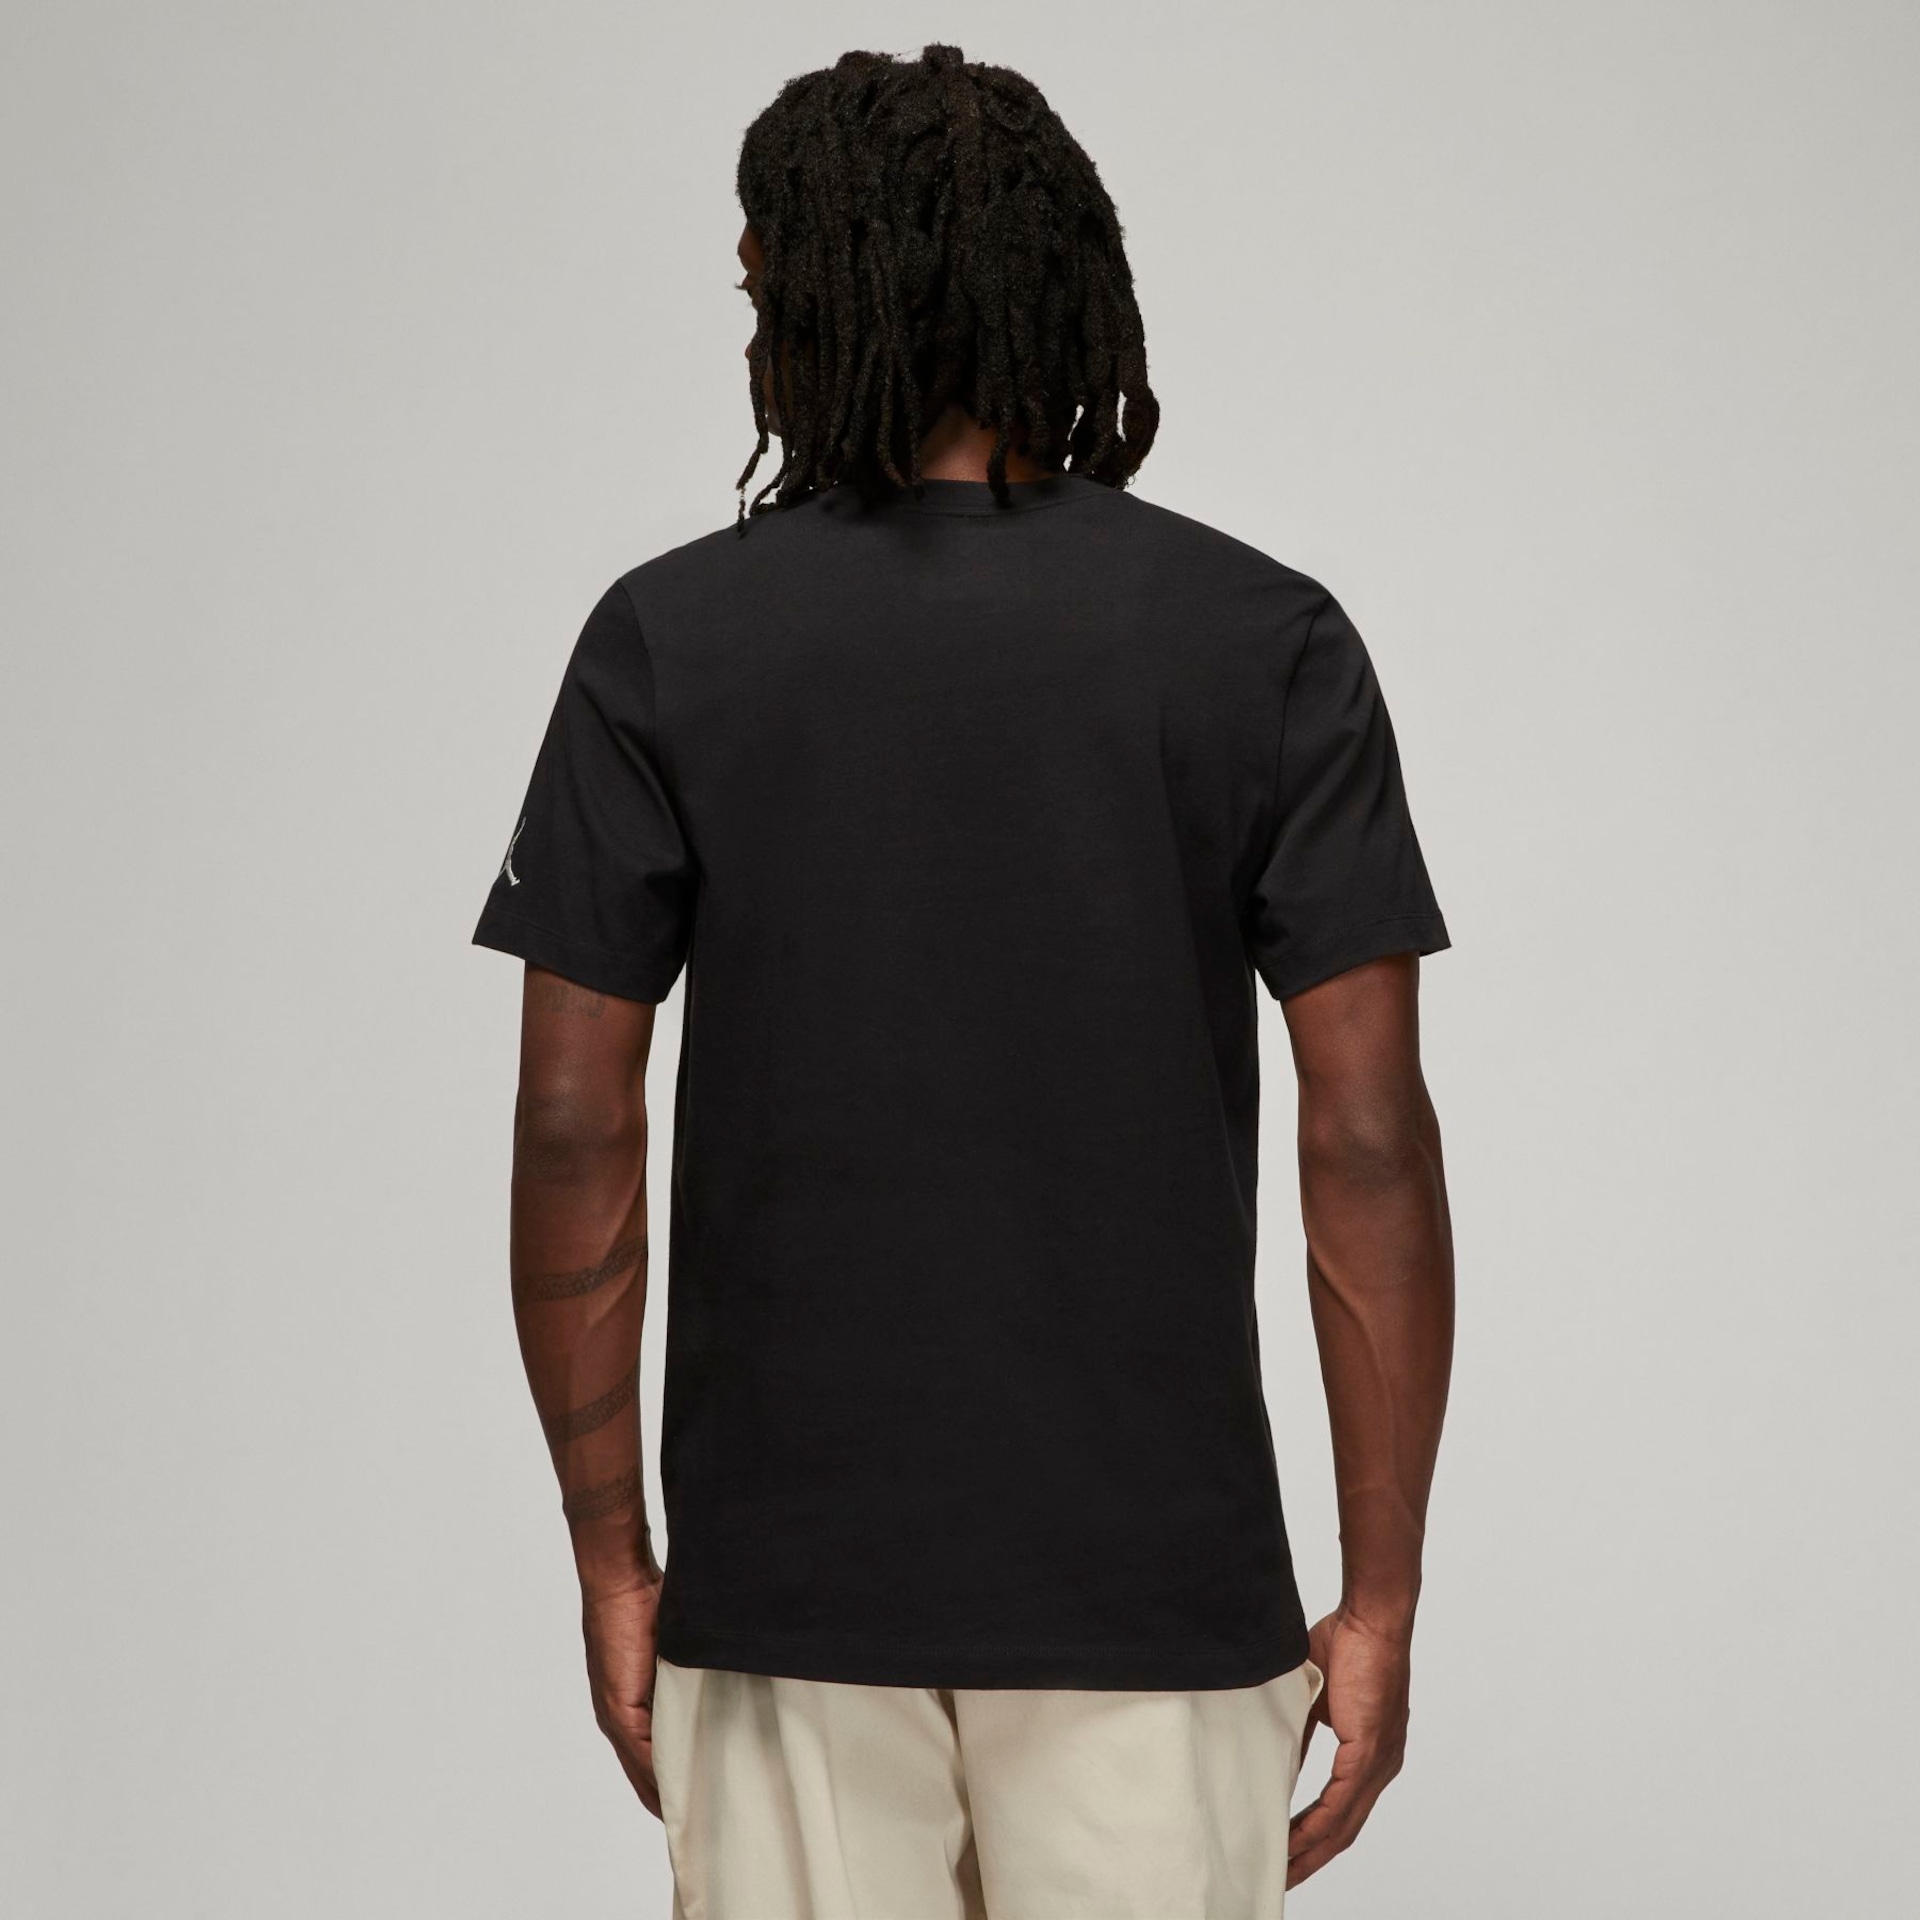 Camiseta Jordan Air Masculina - Foto 2